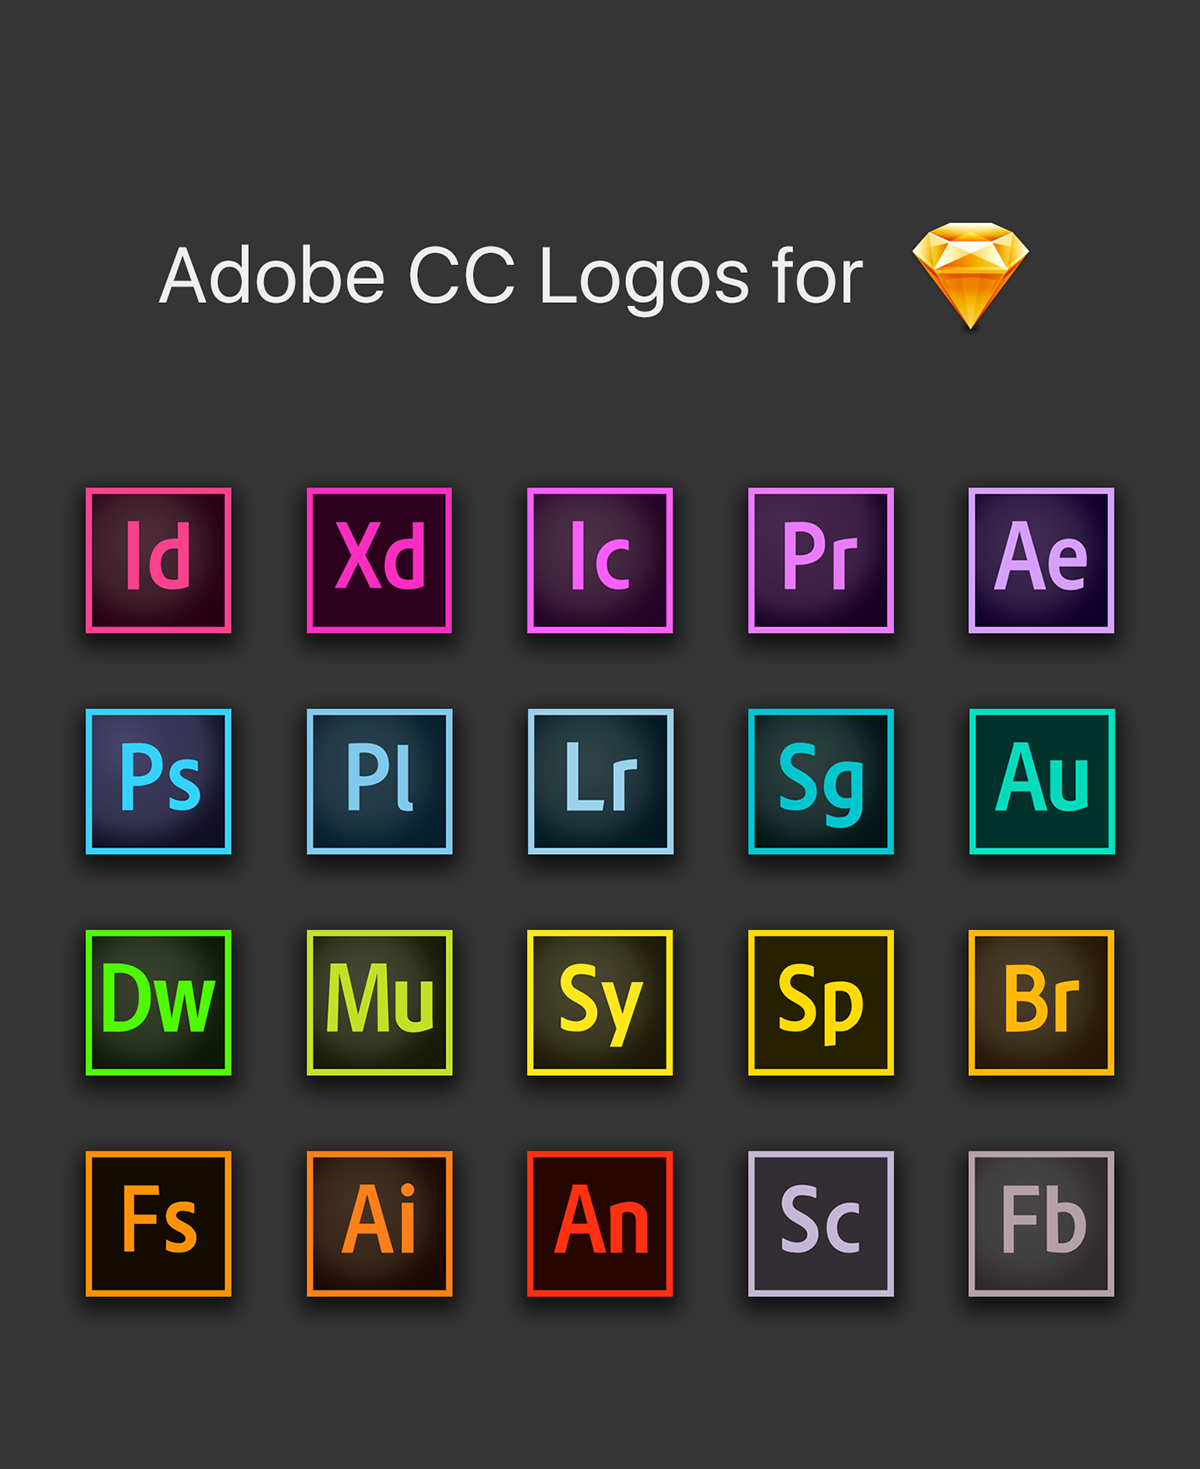 Adobe cc